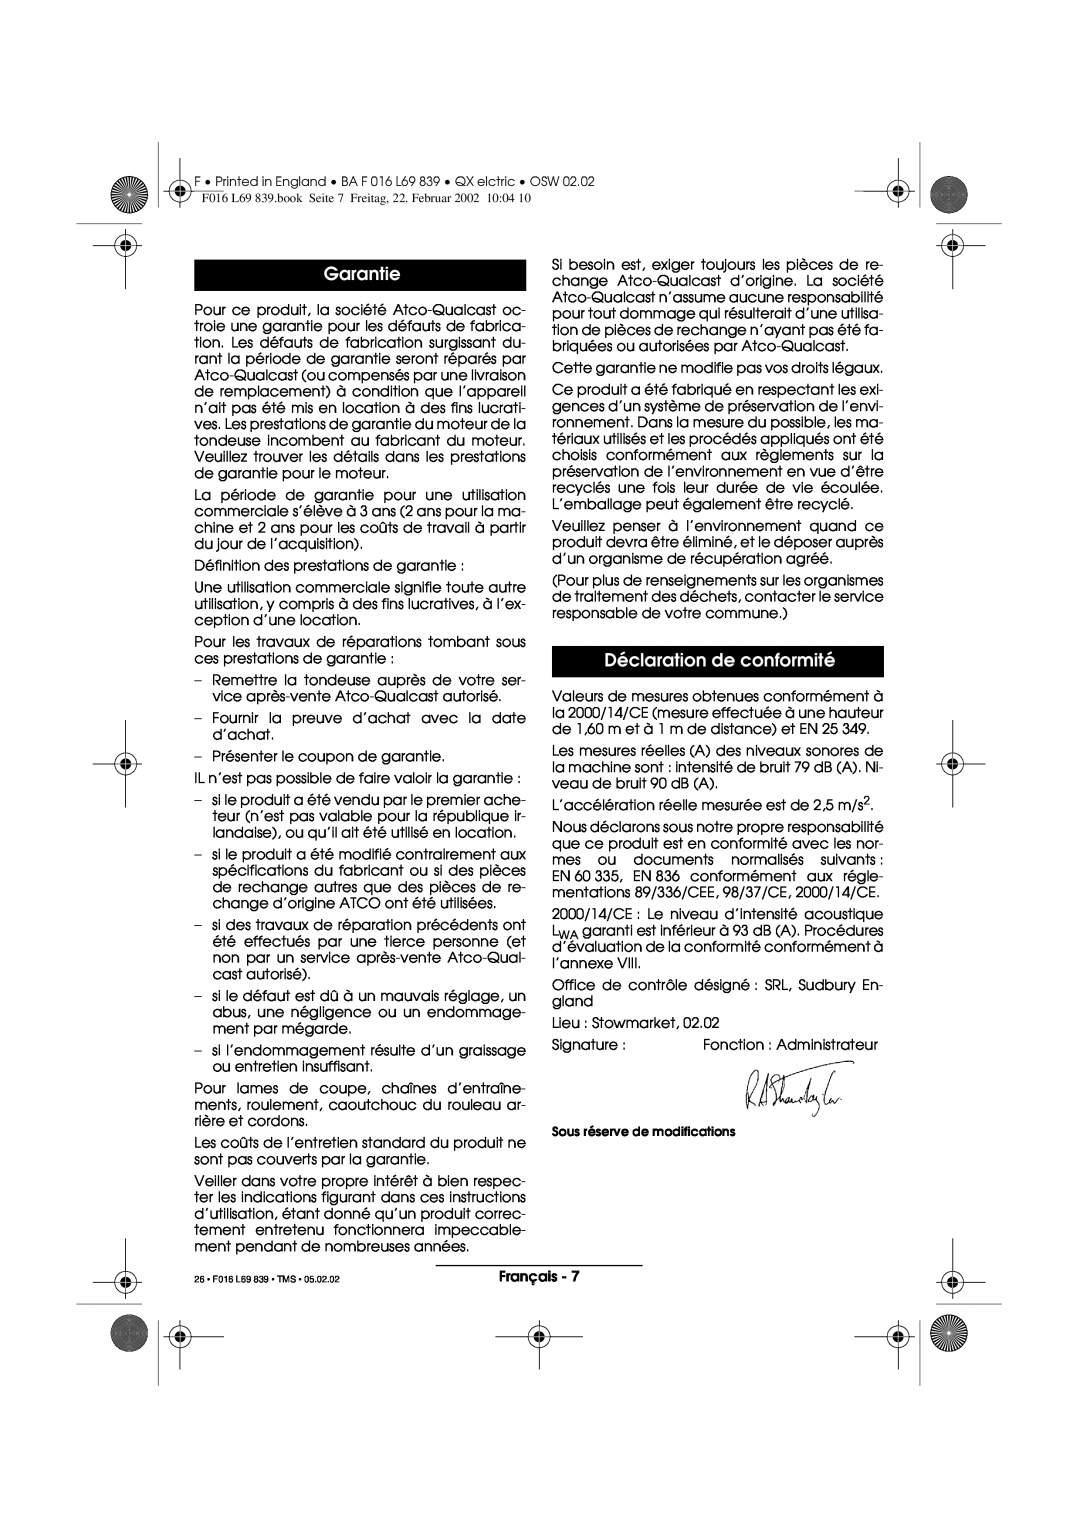 Atco QX operating instructions Déclaration de conformité, Garantie, 26 F016 L69 839 TMS 